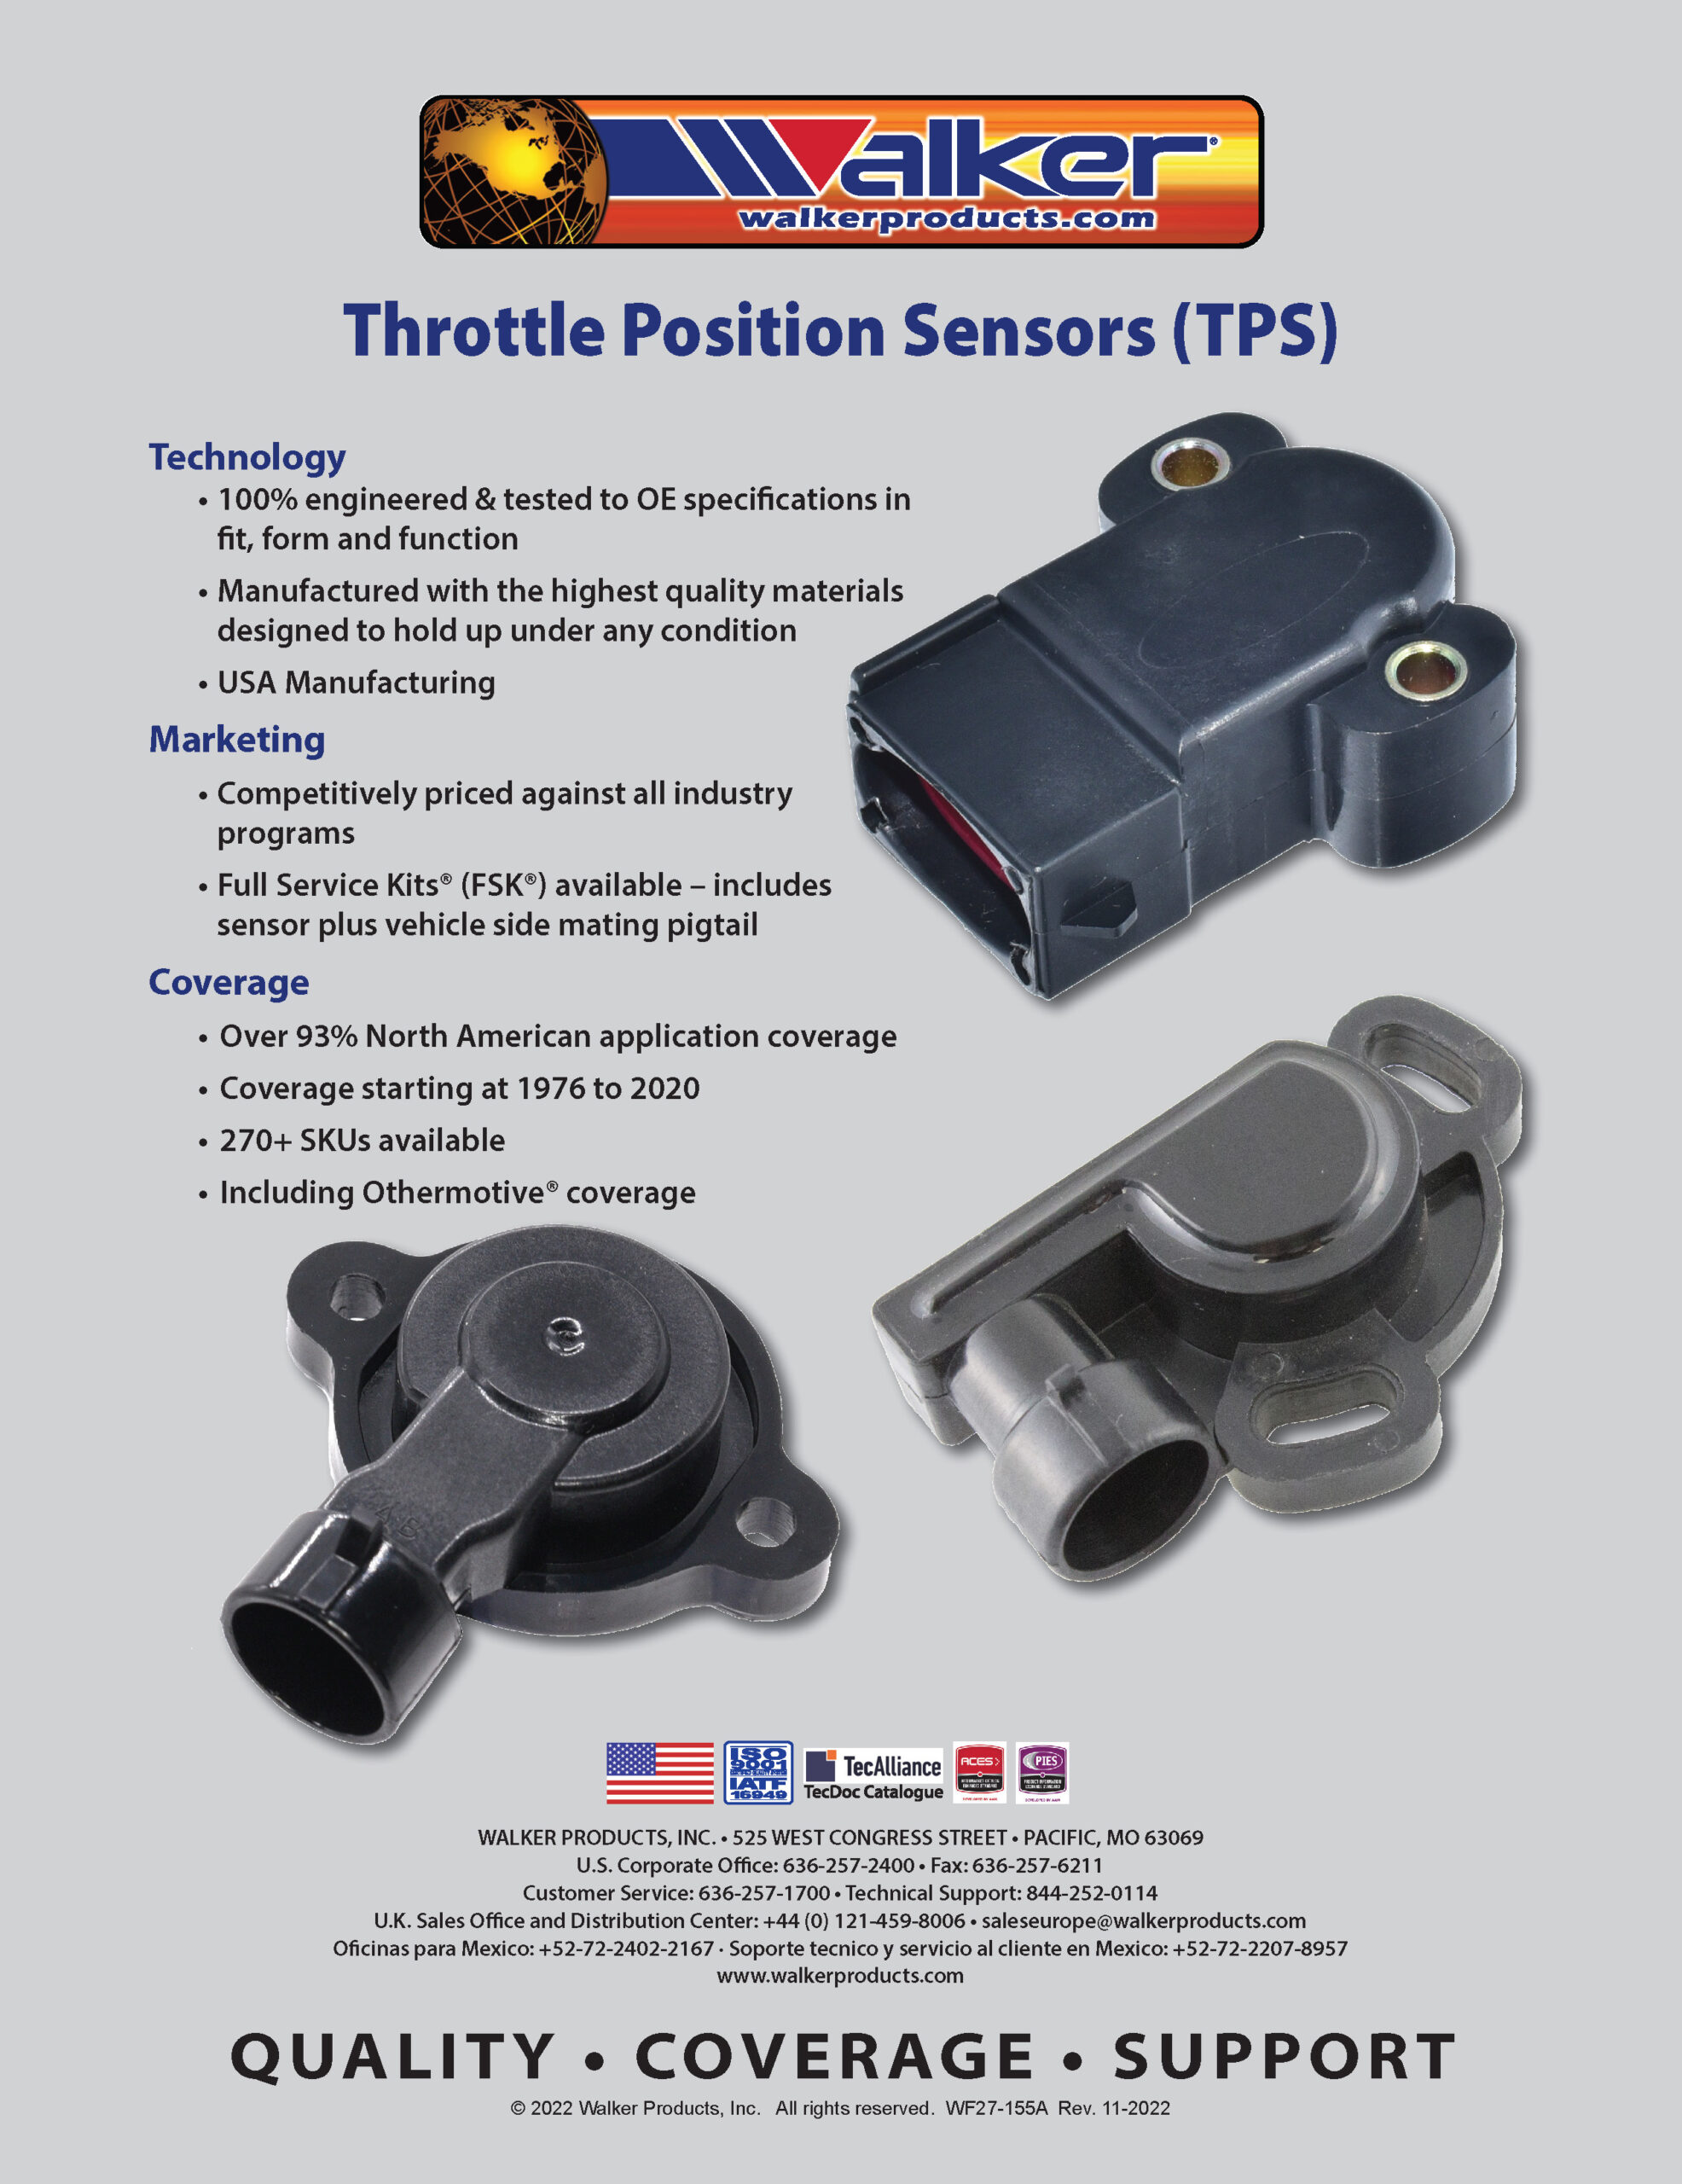 Throttle Position Sensor: Function, Symptoms and Testing